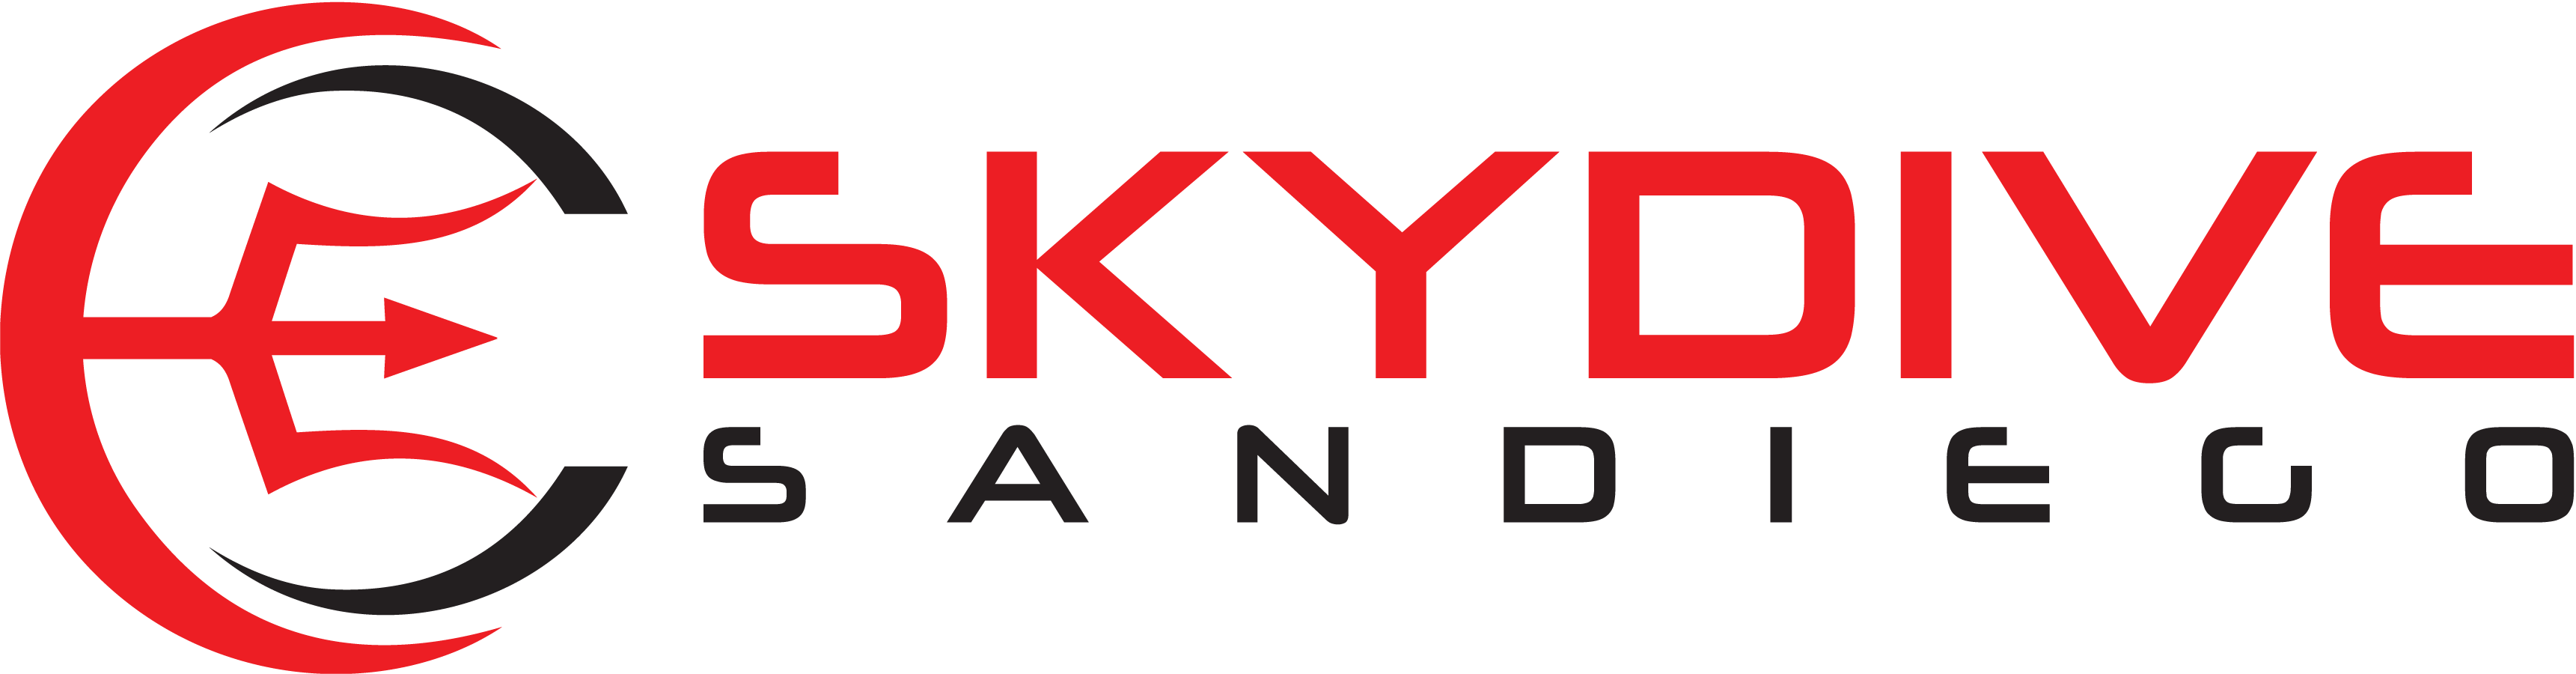 skydive-san-diego-trident-logo-copy